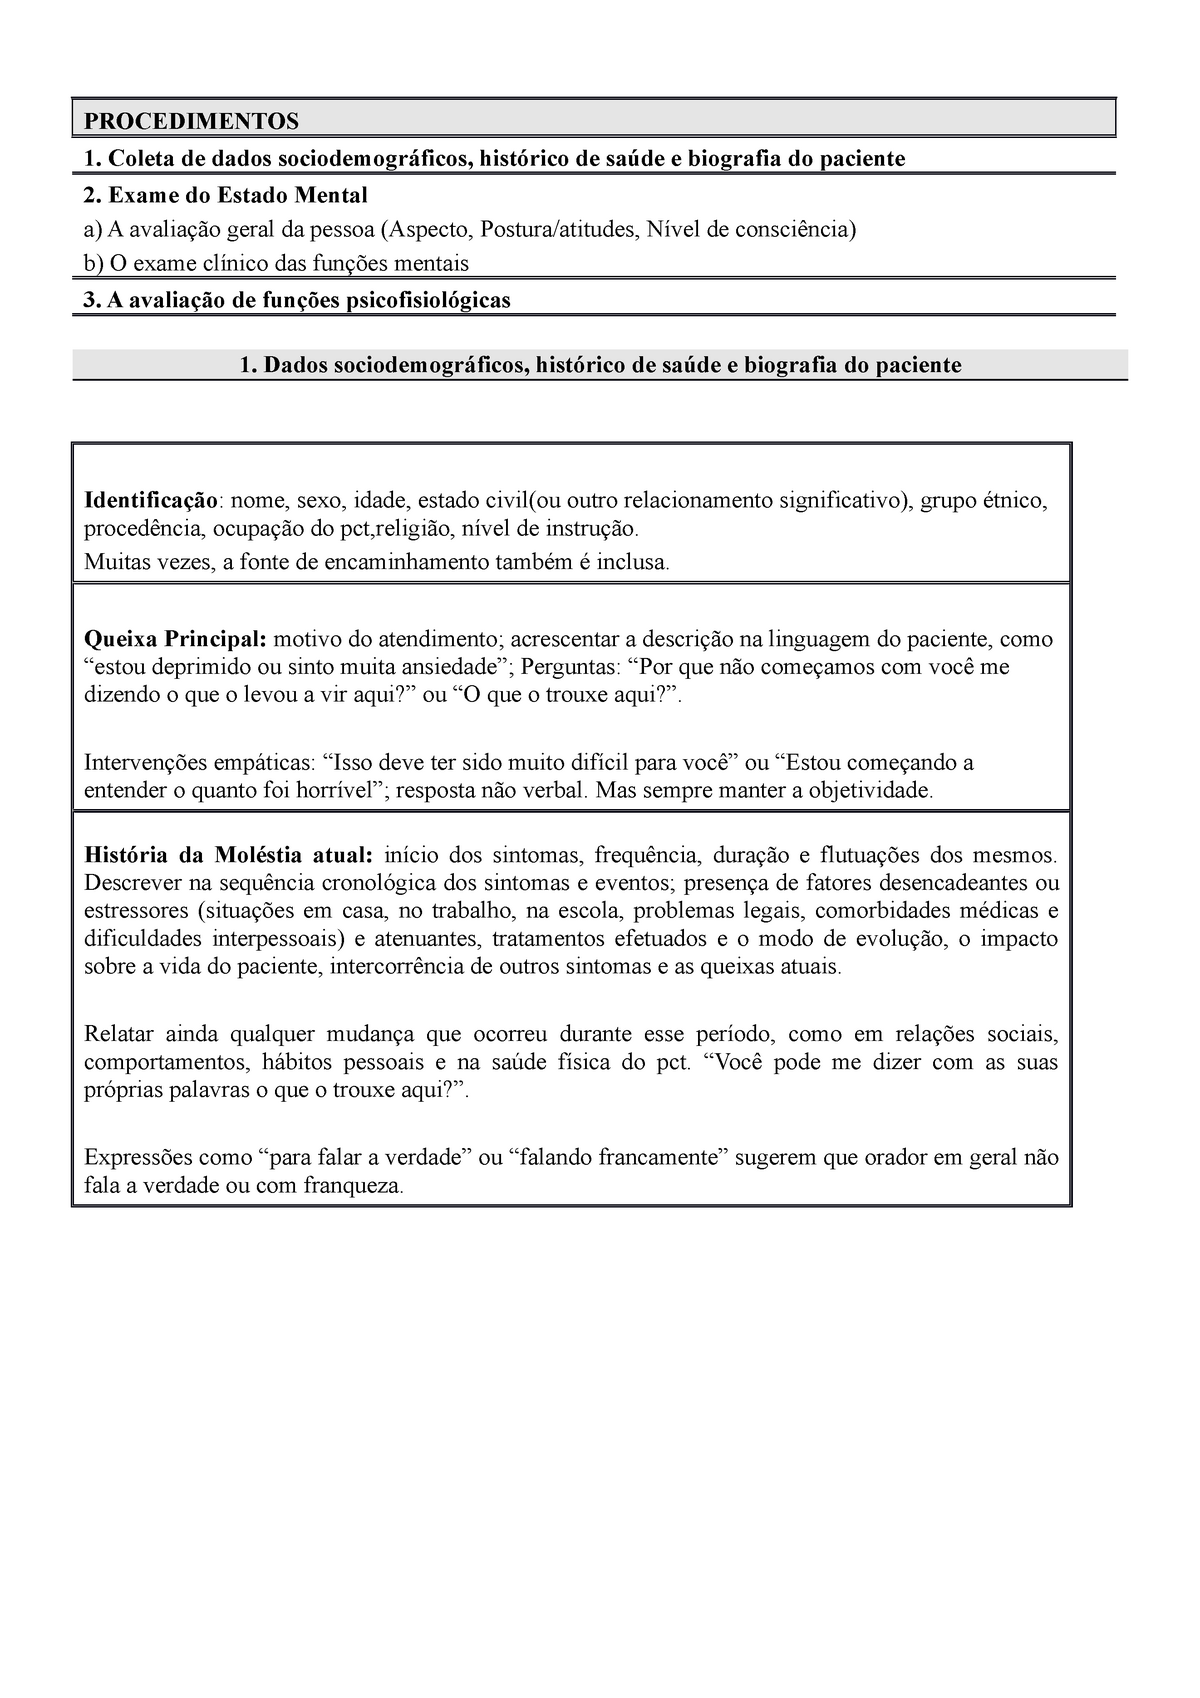 Ficha de Anamnese Psicológica, PDF, Sistema de saúde